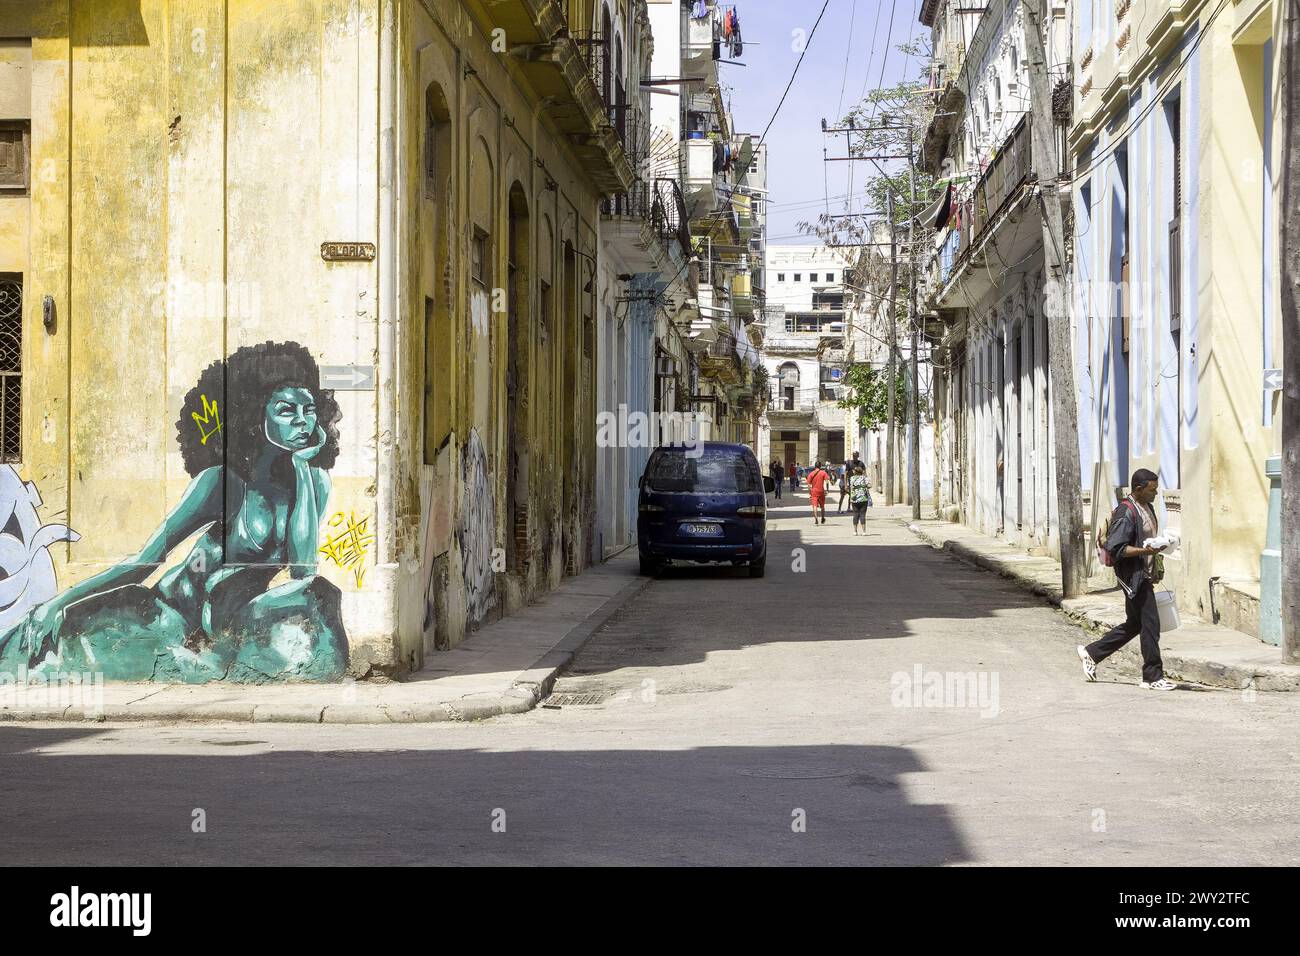 Cuban person walking in street, urban graffiti art, weathered building facade, avana, Cuba Stock Photo